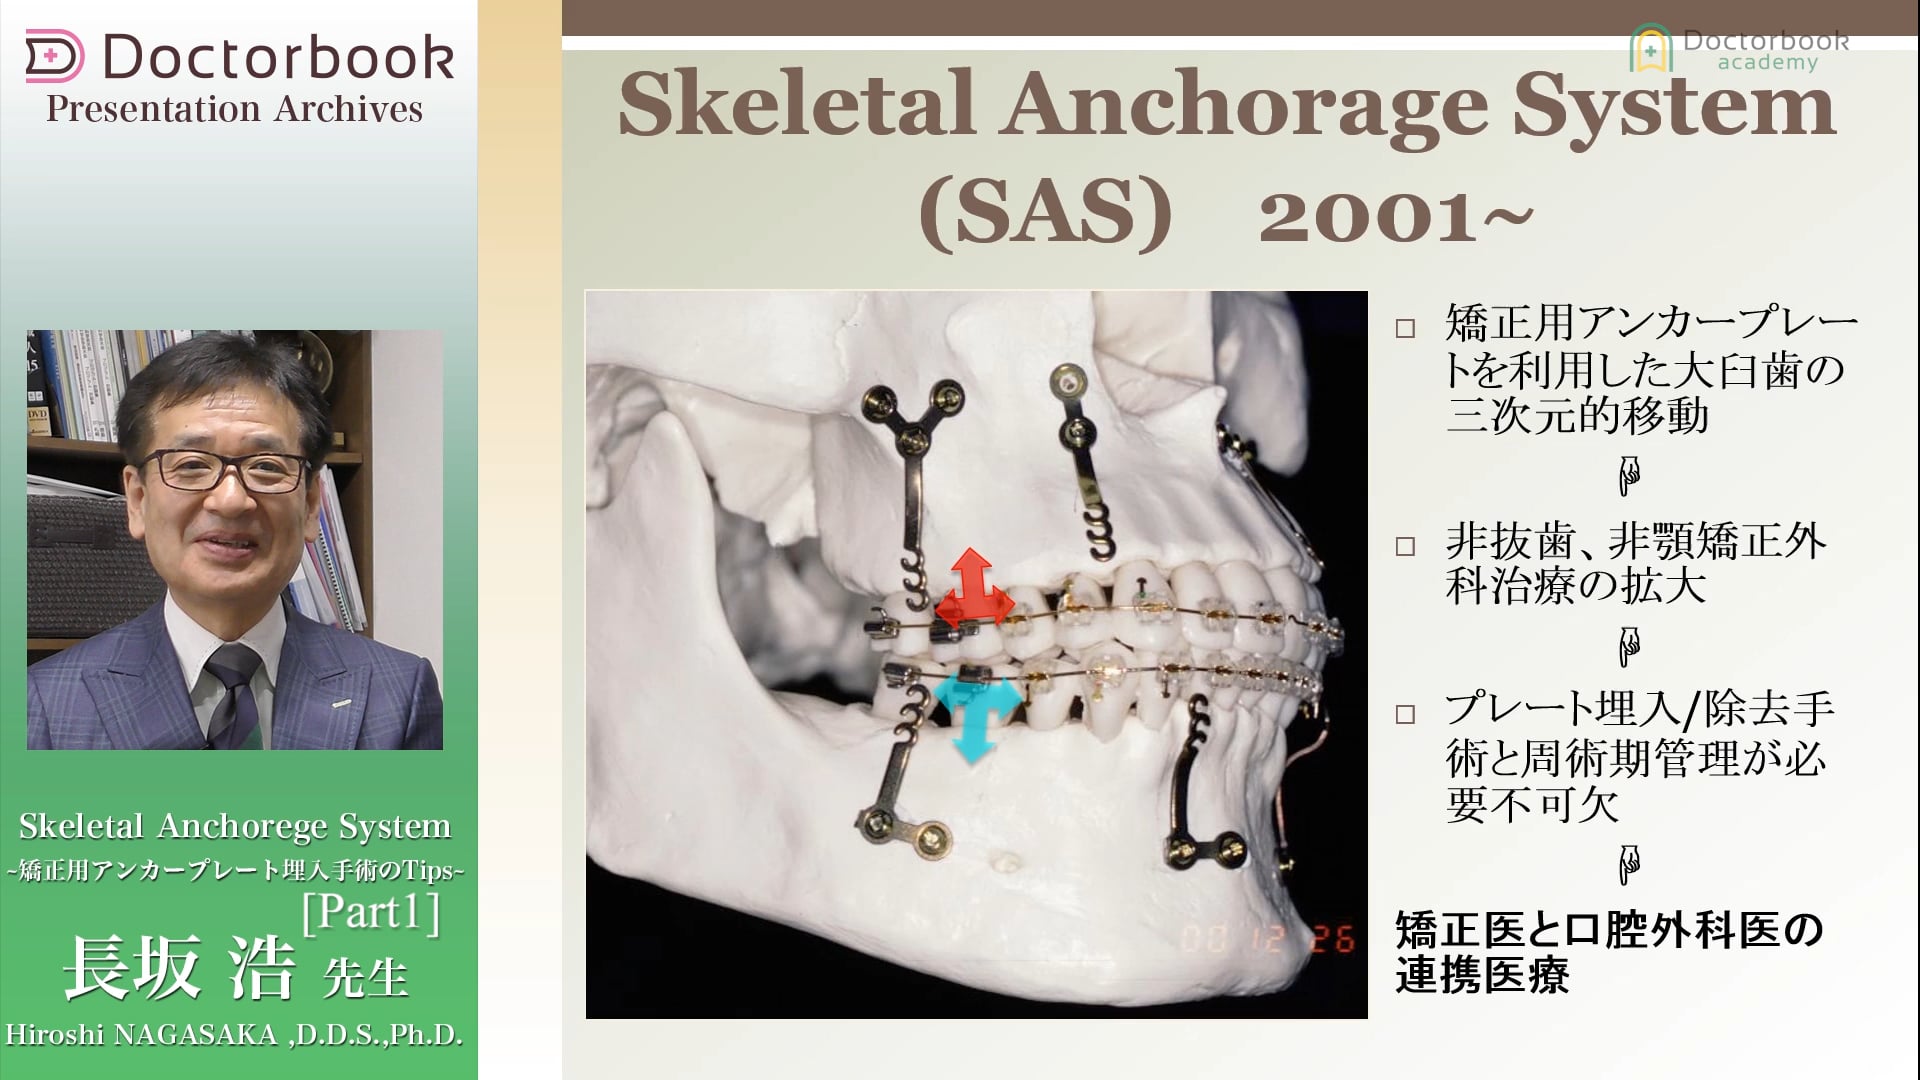 #1 Skeletal Anchorage Systemについて